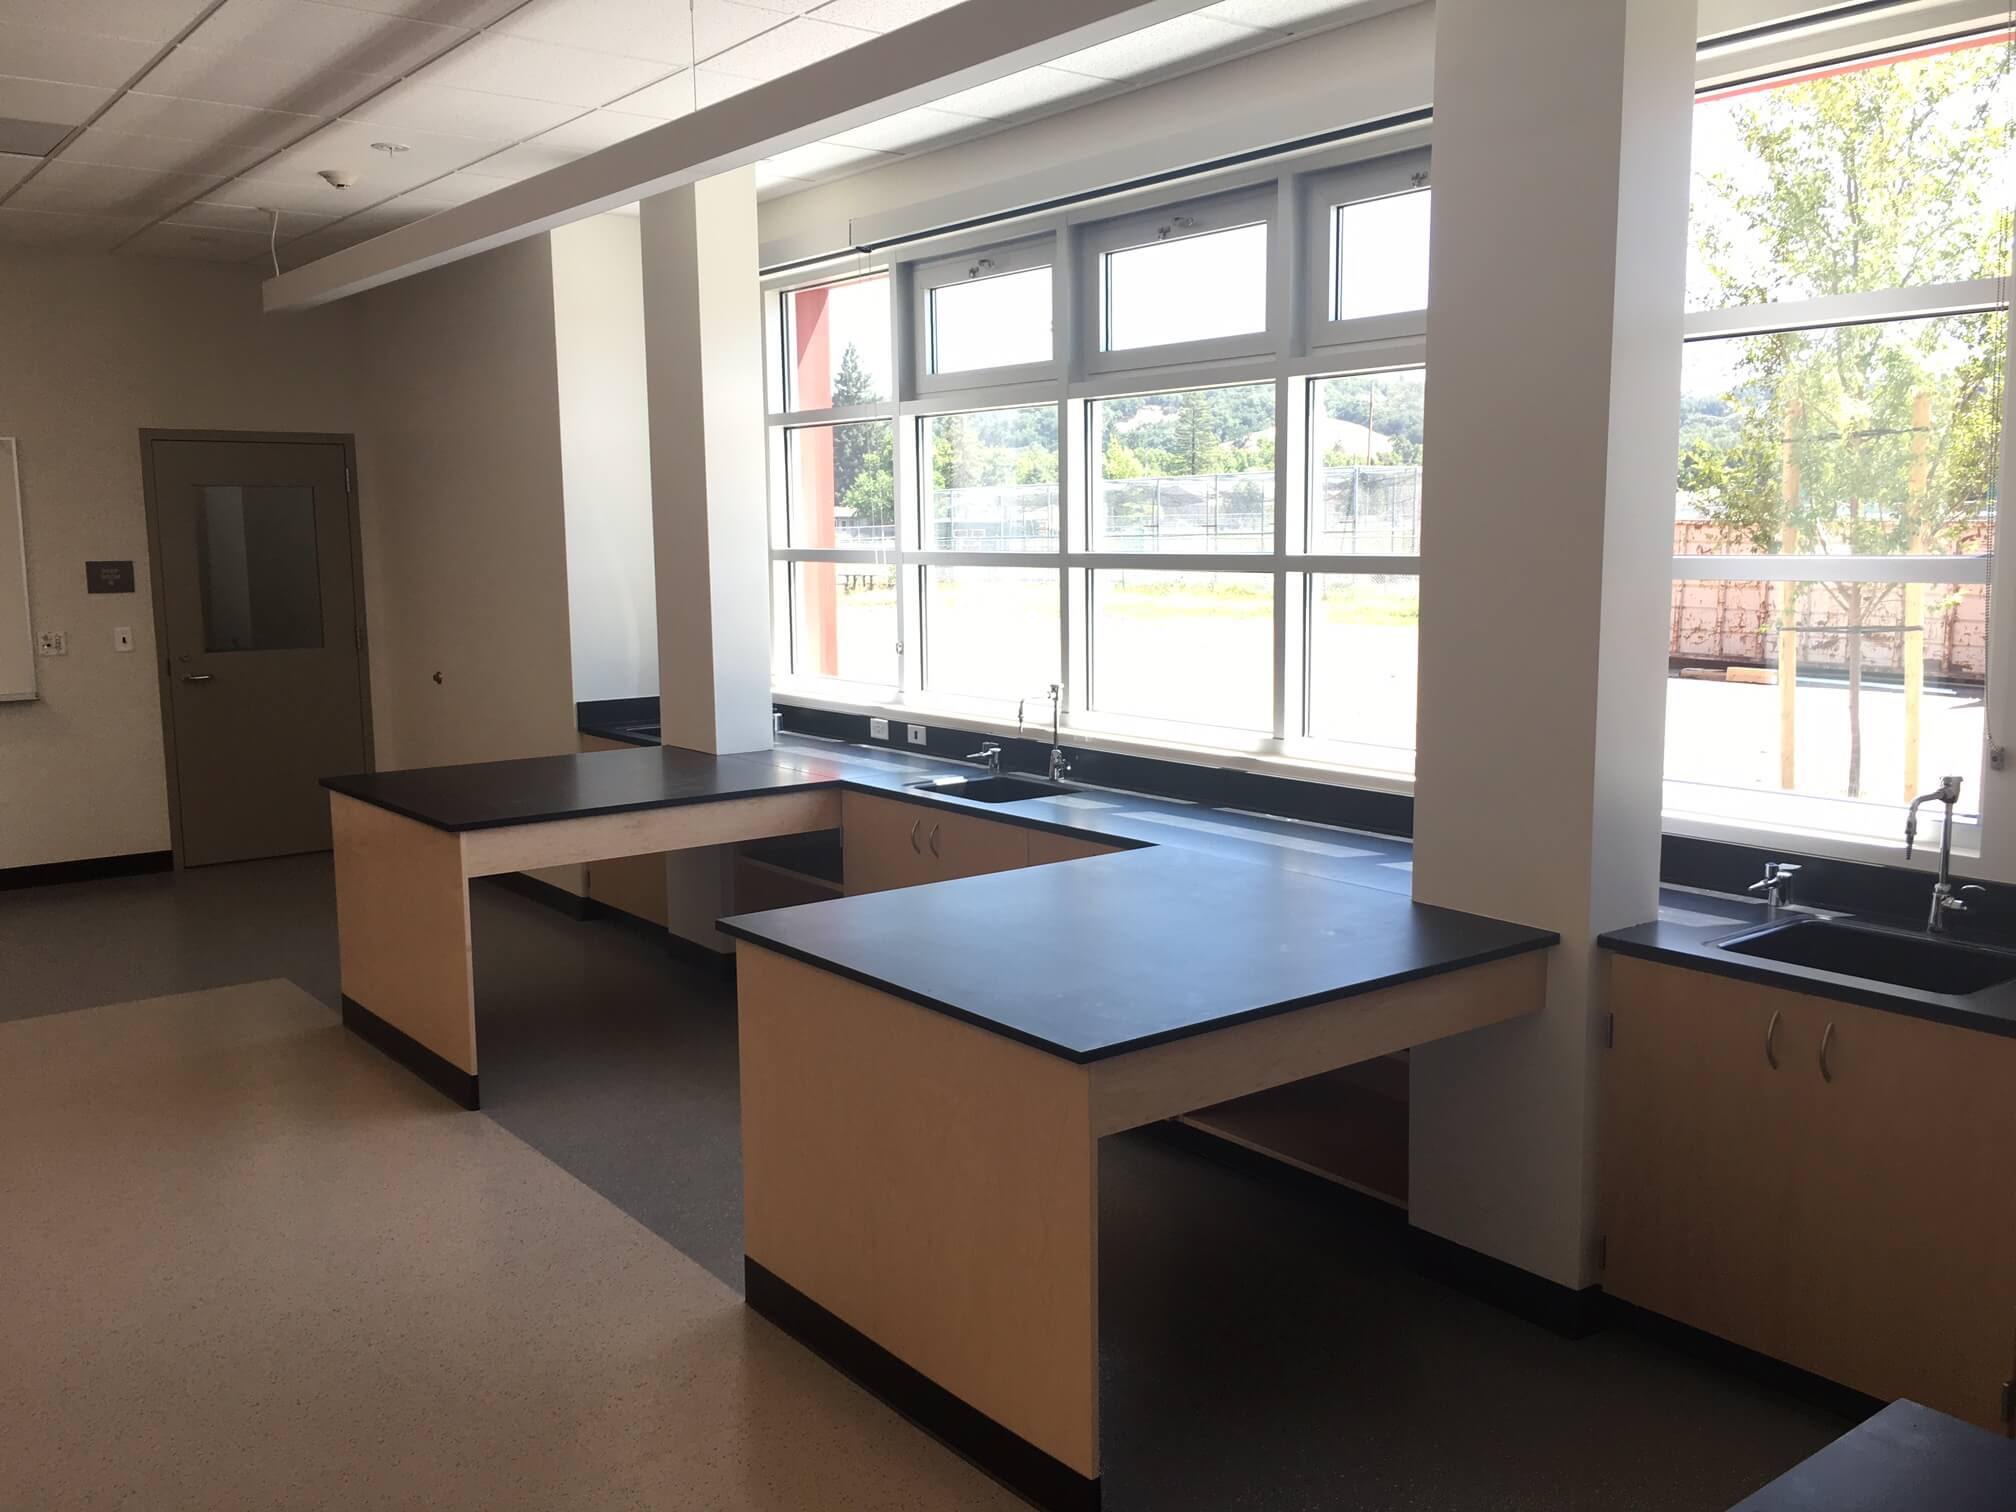 Healdsburg High School Modular Classroom Interior